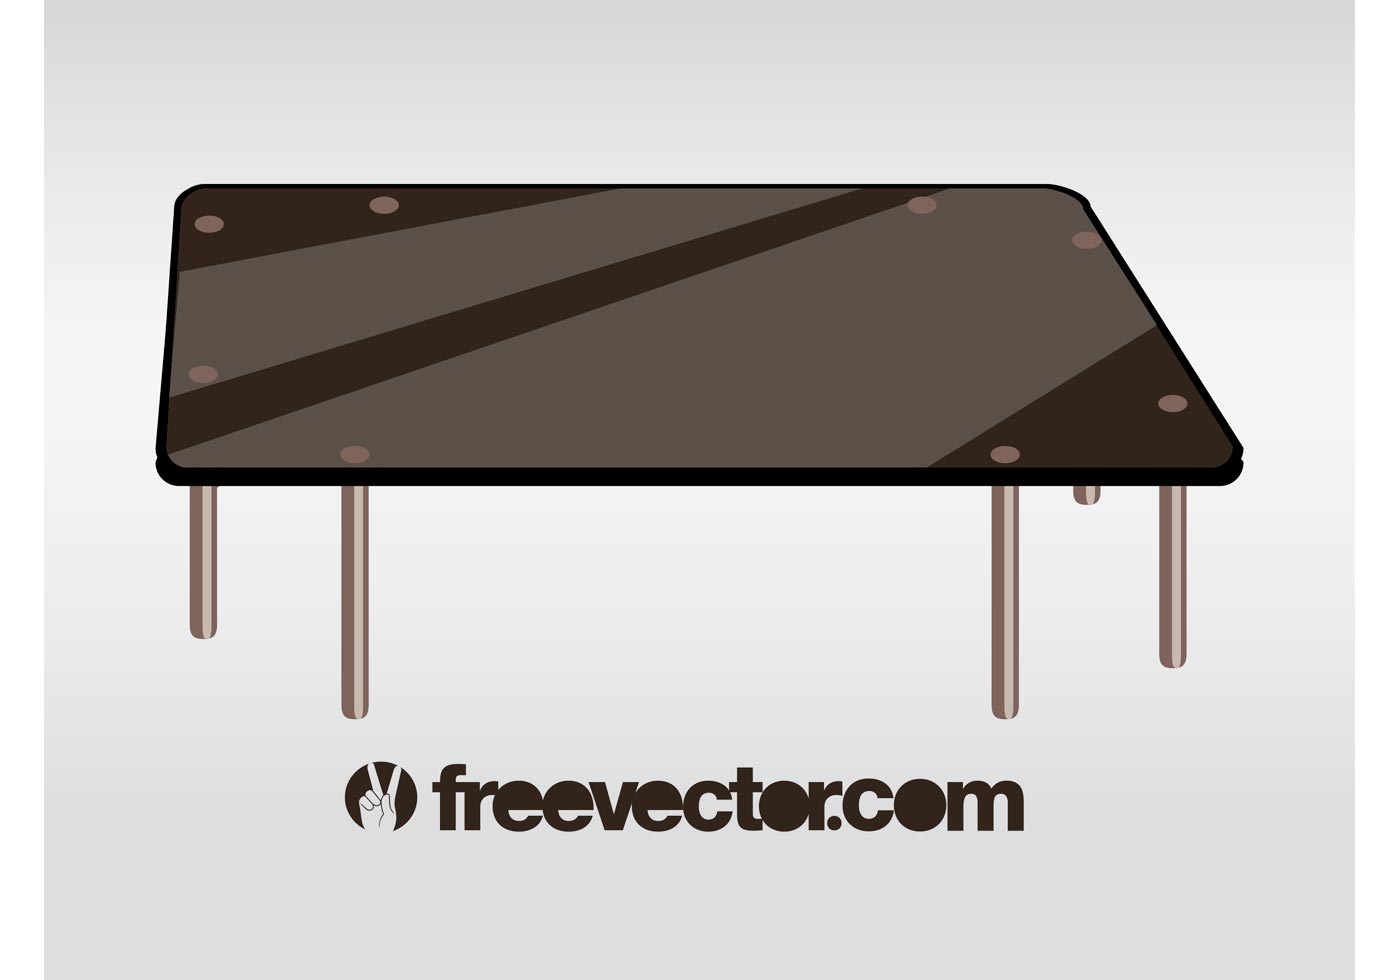 Table Vector - Download Free Vector Art, Stock Graphics ...